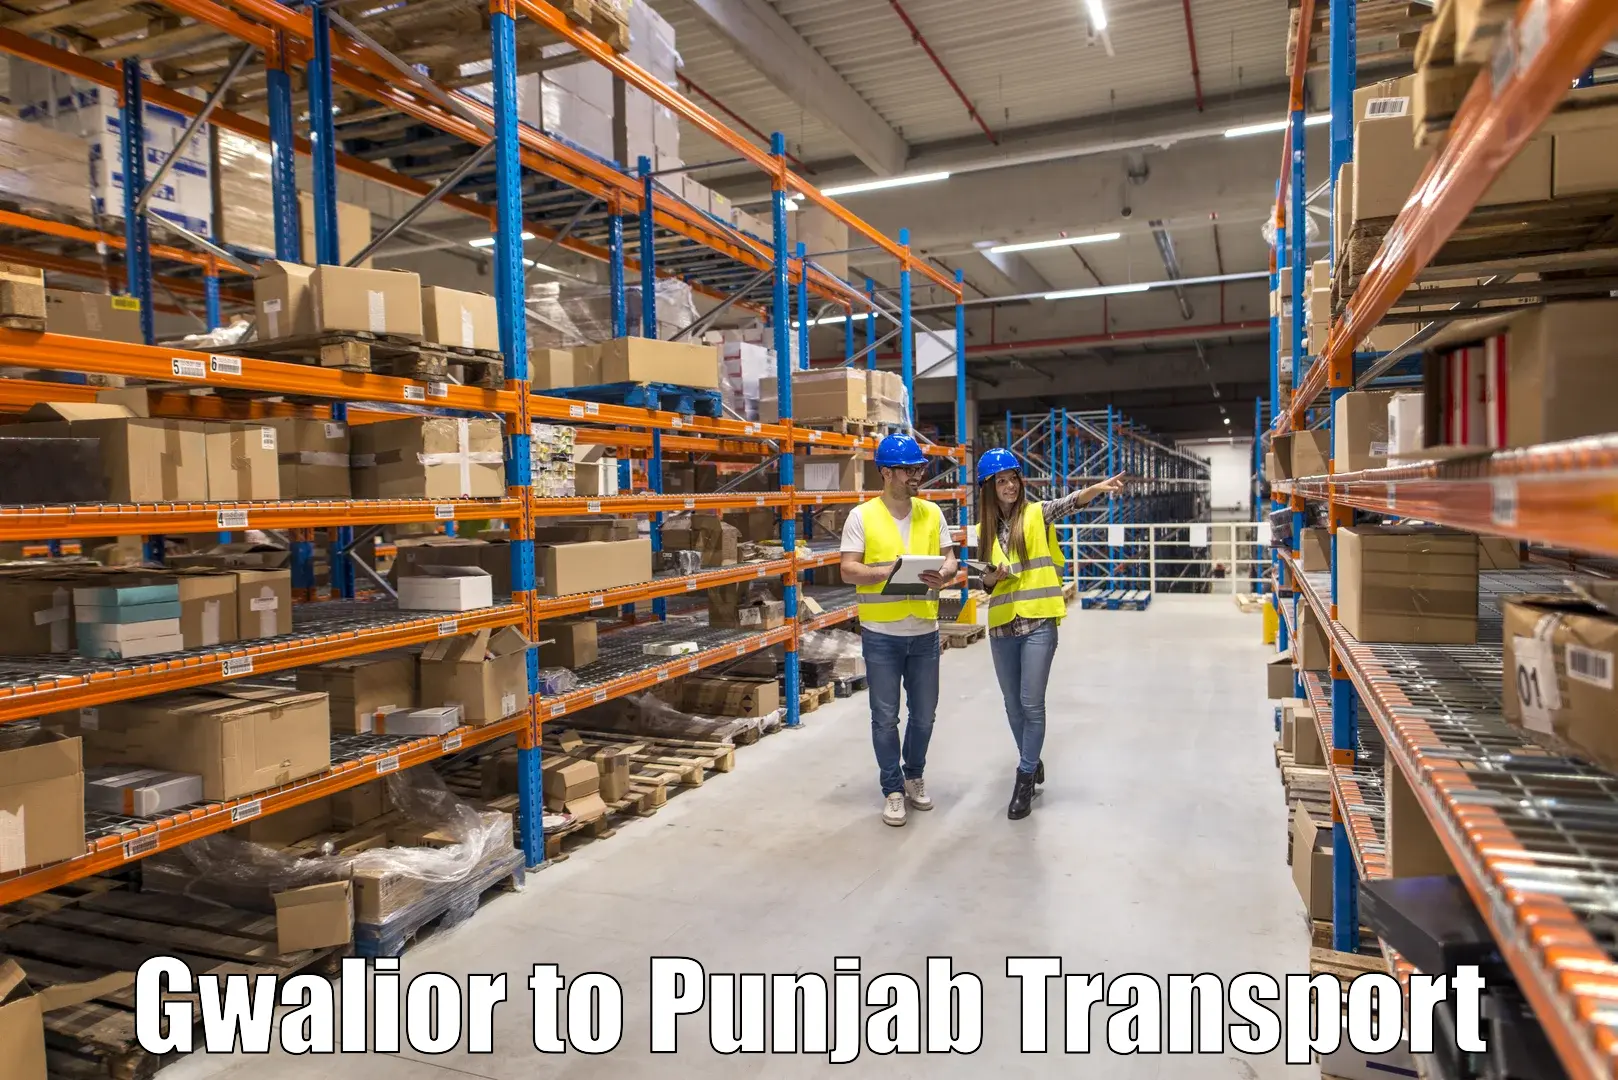 Online transport service Gwalior to Amritsar